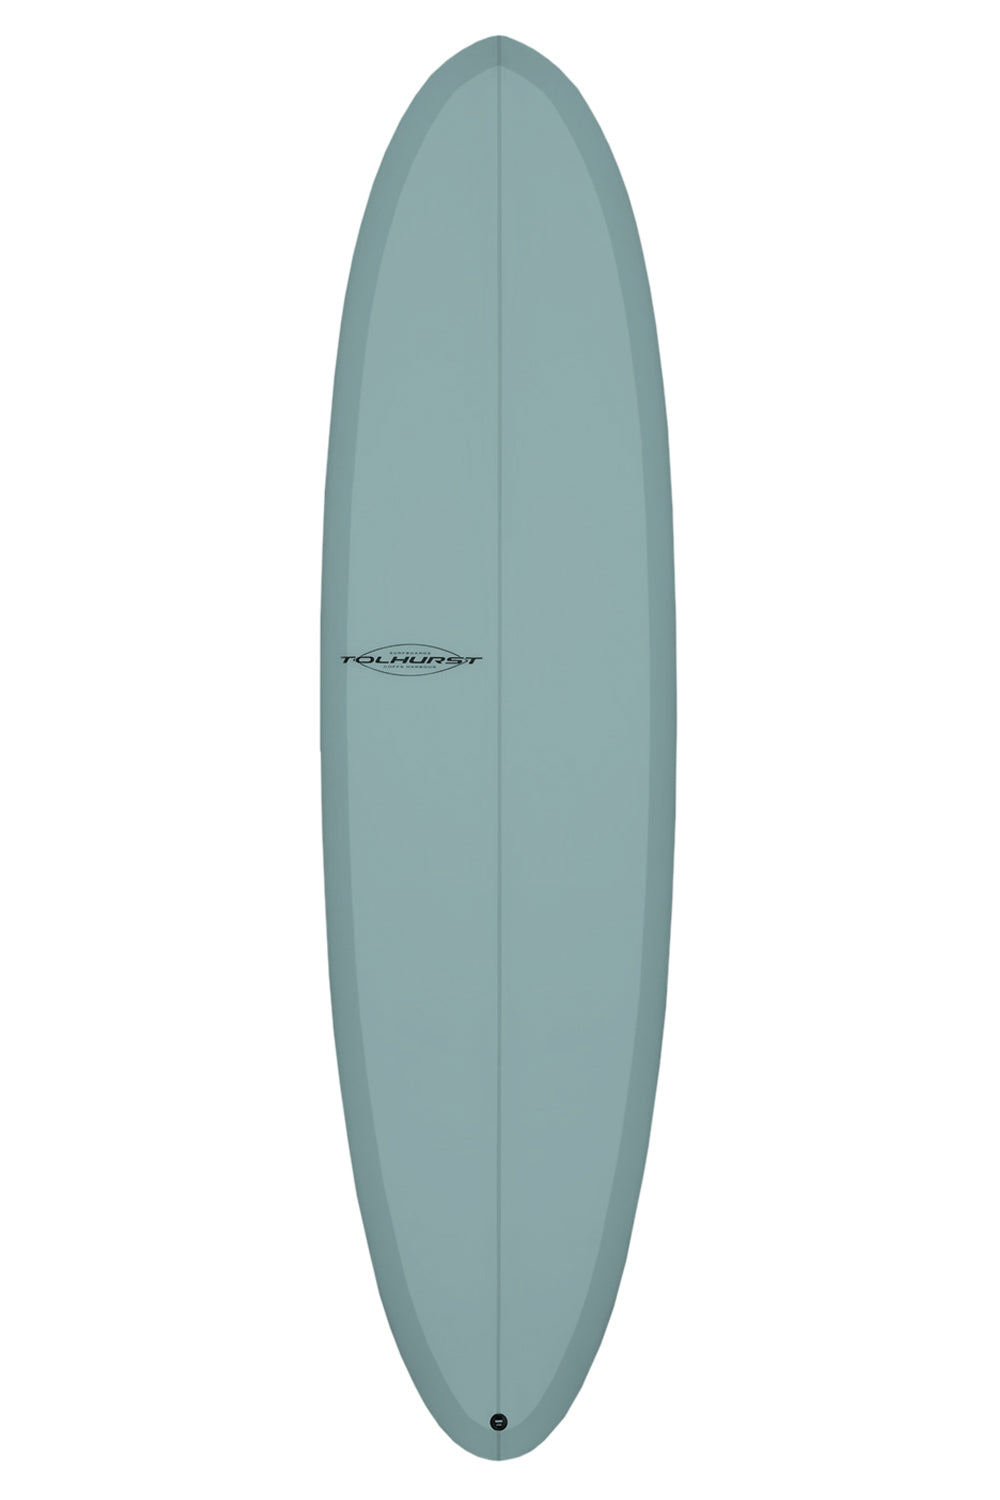 Tolhurst Middy Surfboard